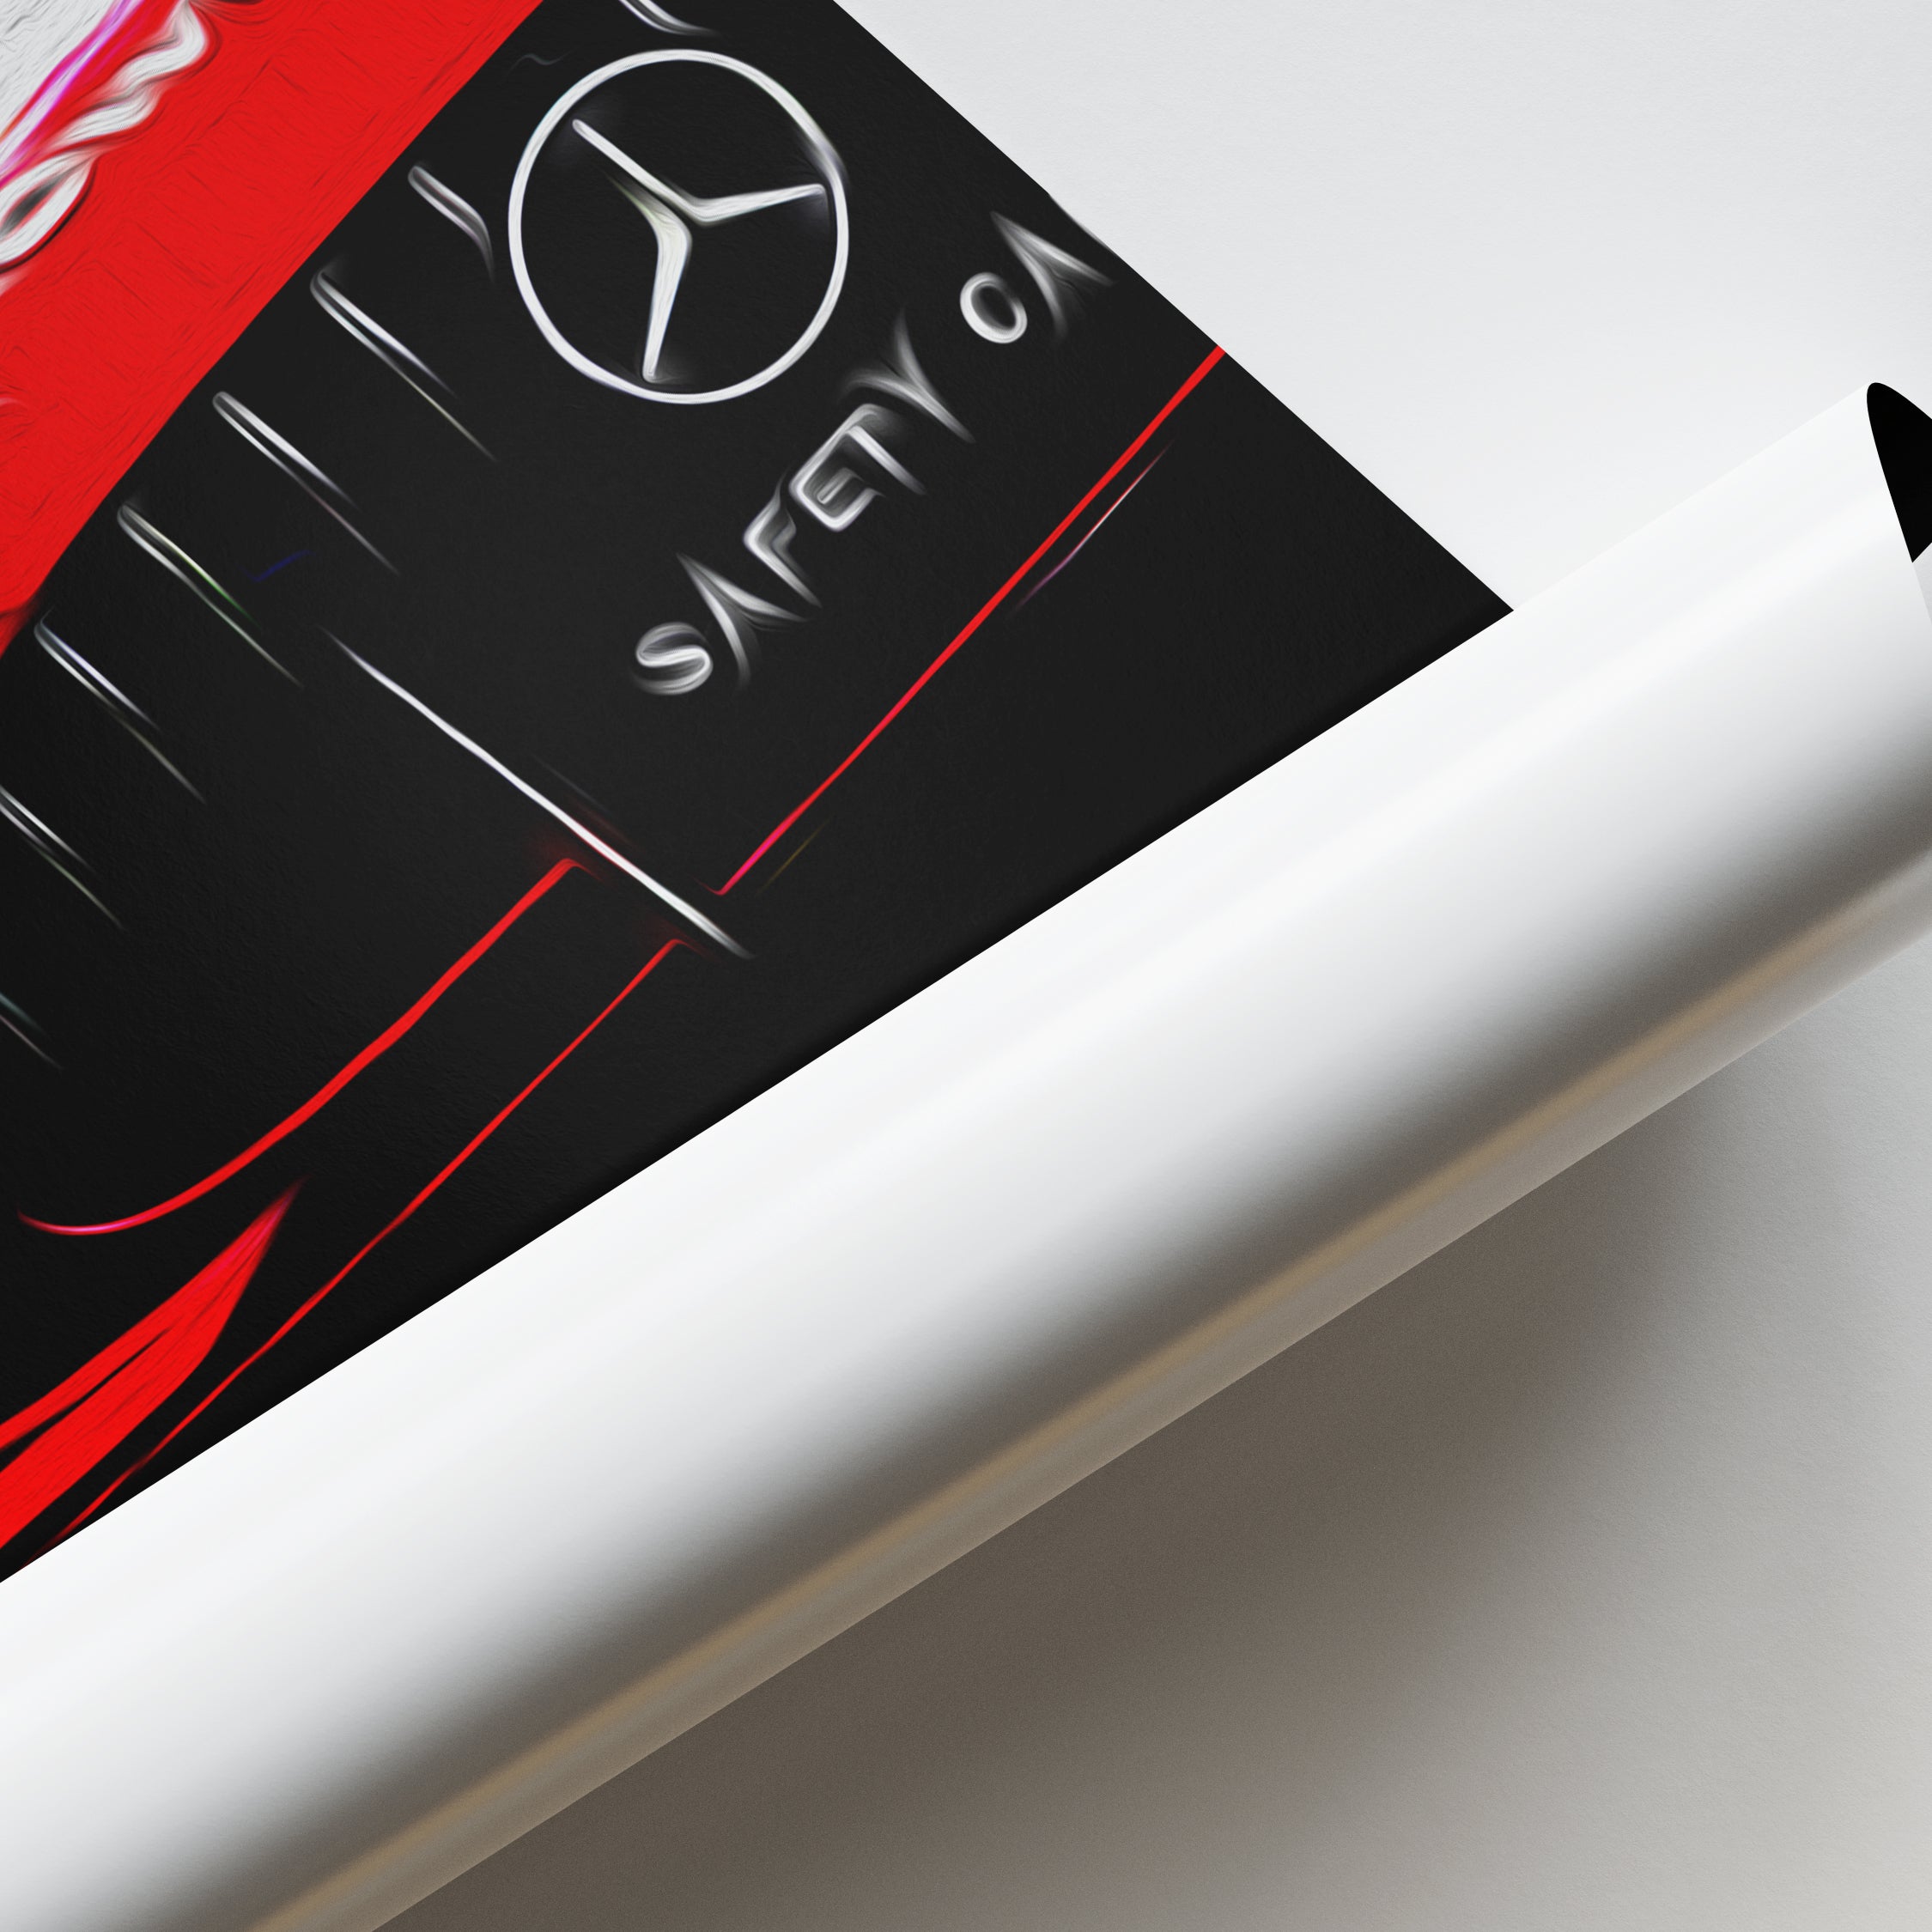 Mercedes AMG GT Black Series - Formula 1 Safety Car Print